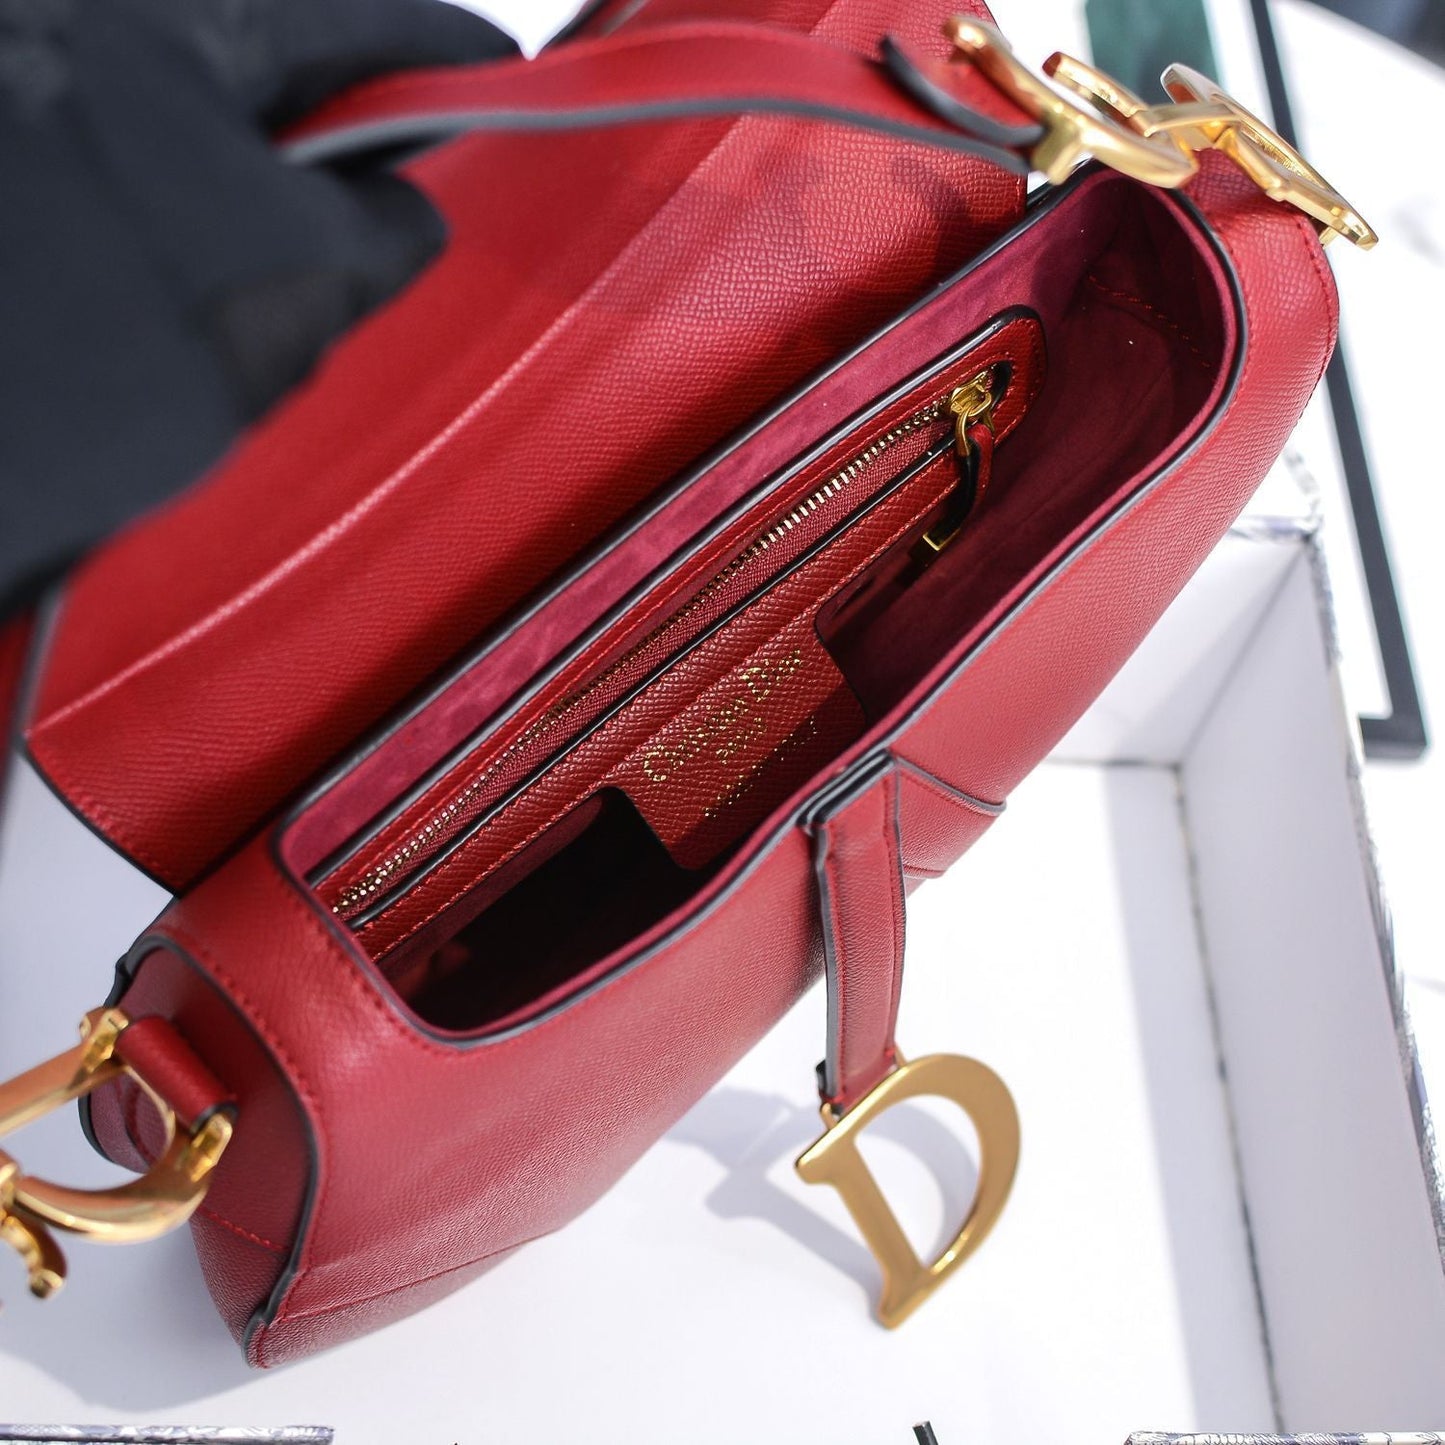 Designer Handbags DR 277